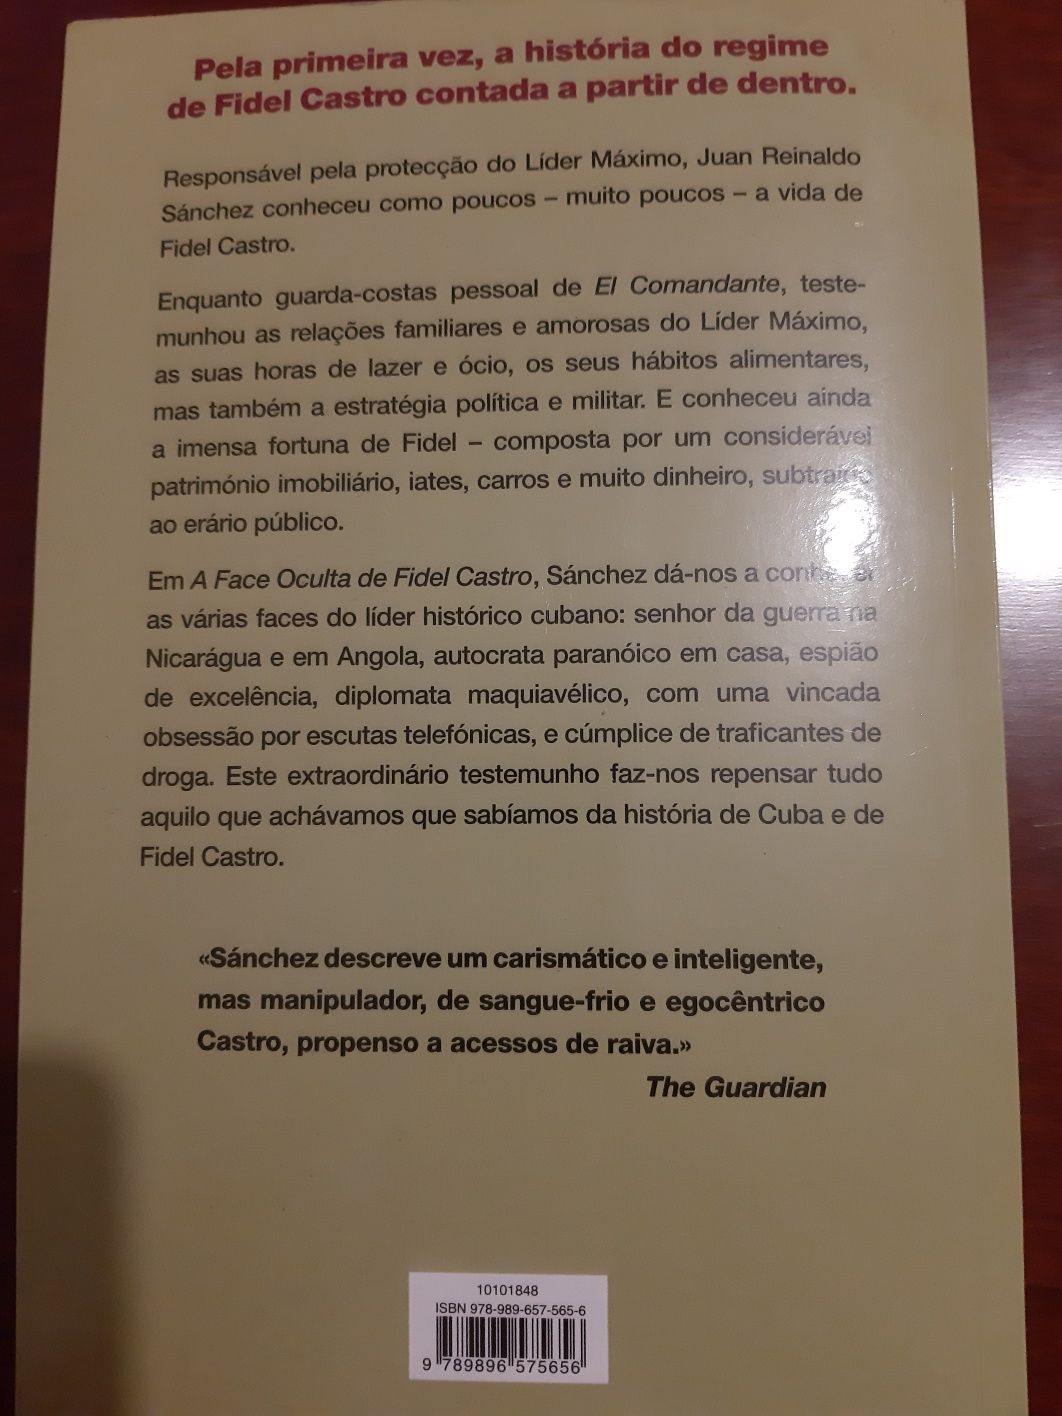 Livro " A face oculta de Fidel Castro"